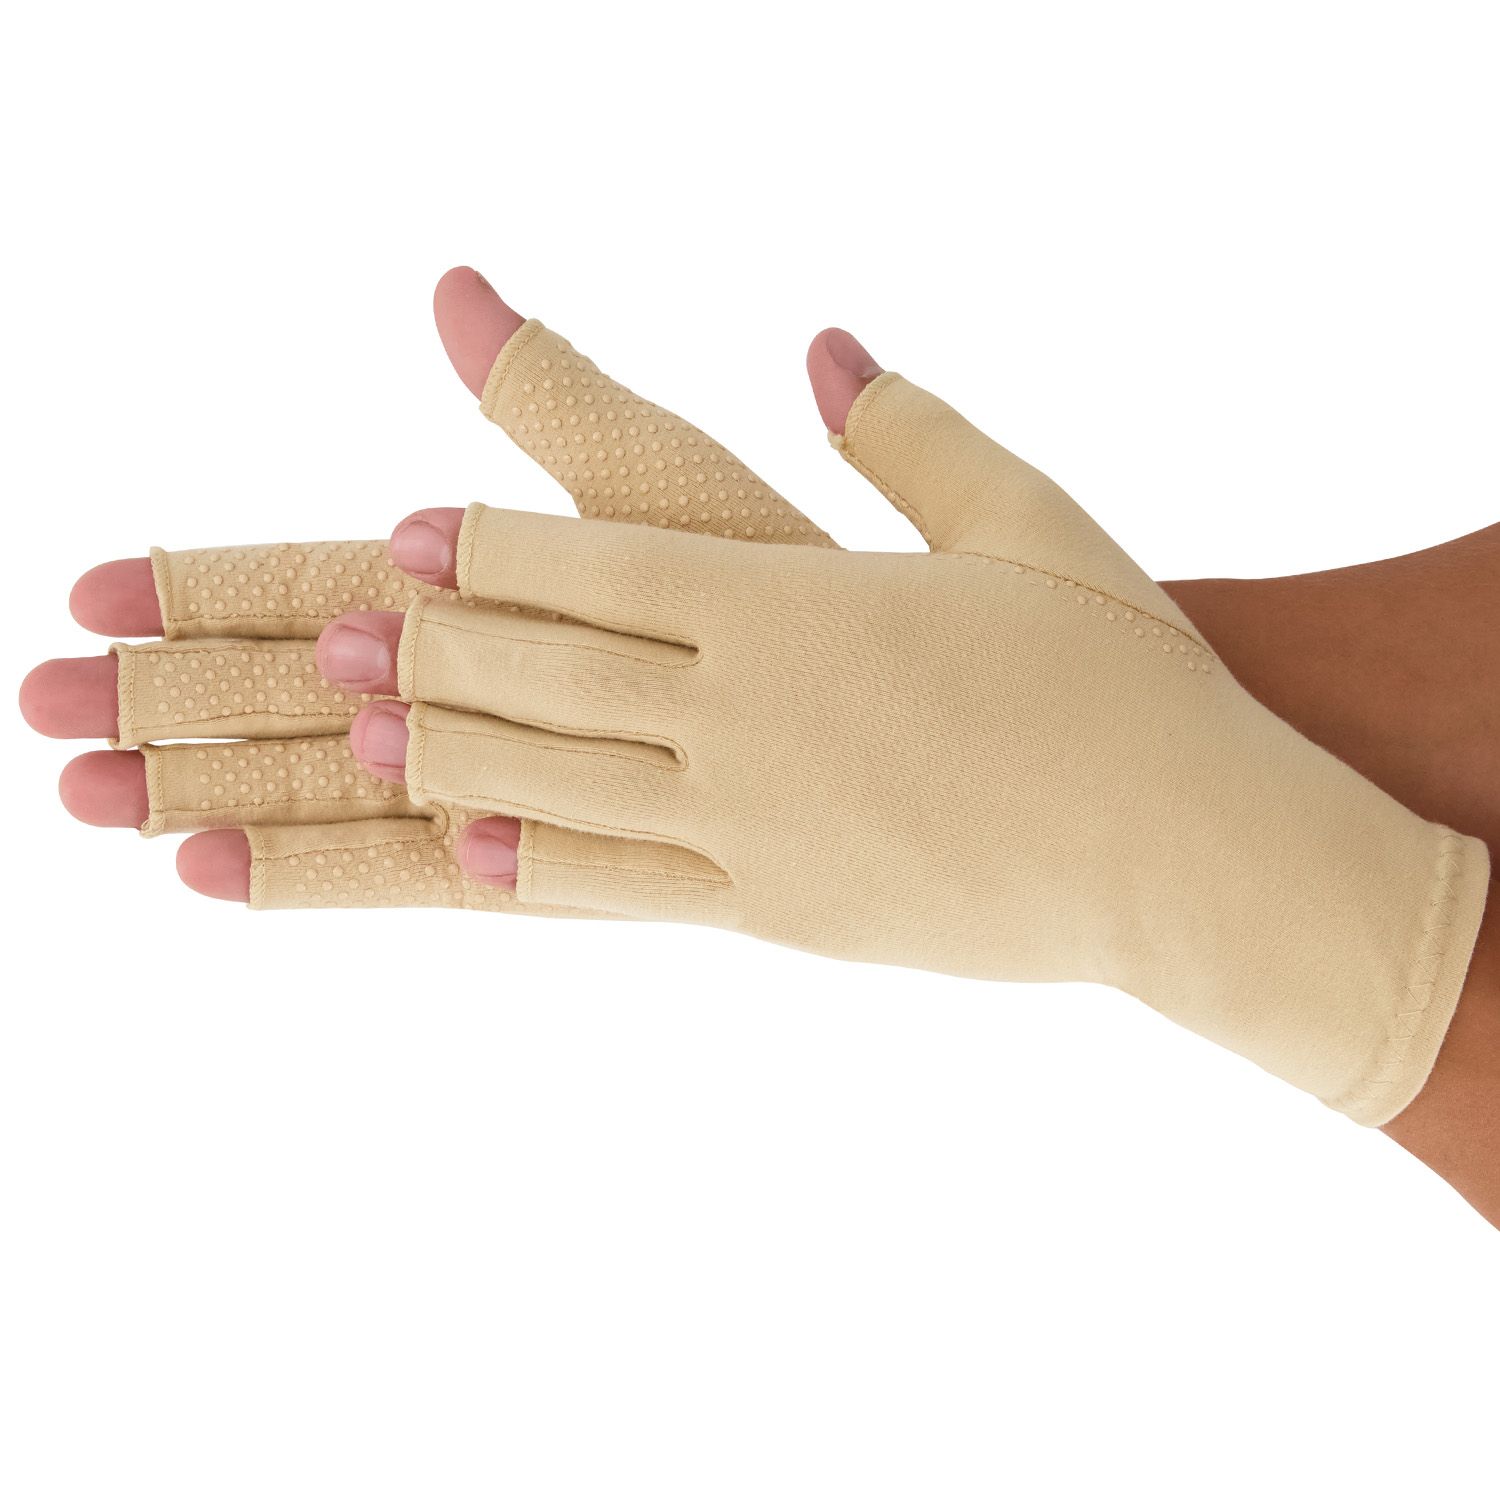 medidu rheumatoid arthritis osteoarthritis gloves with anti-slip layer in skin worn on both hands